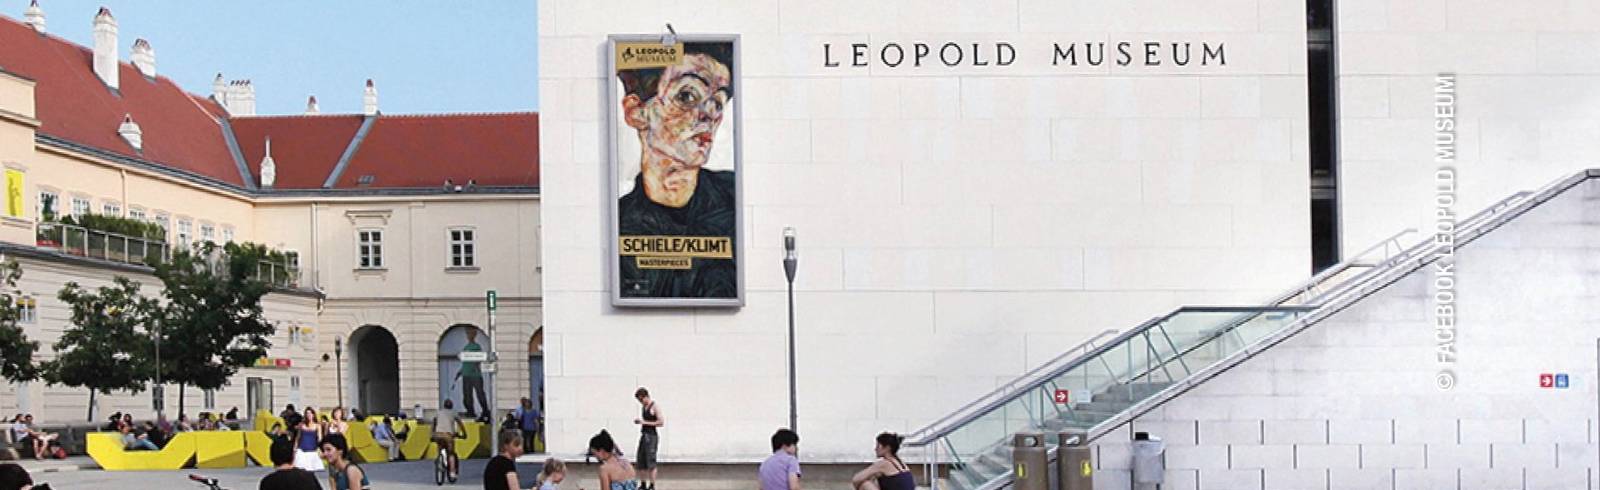 Leopoldmuseum knackt halbe Million-Besucher-Marke